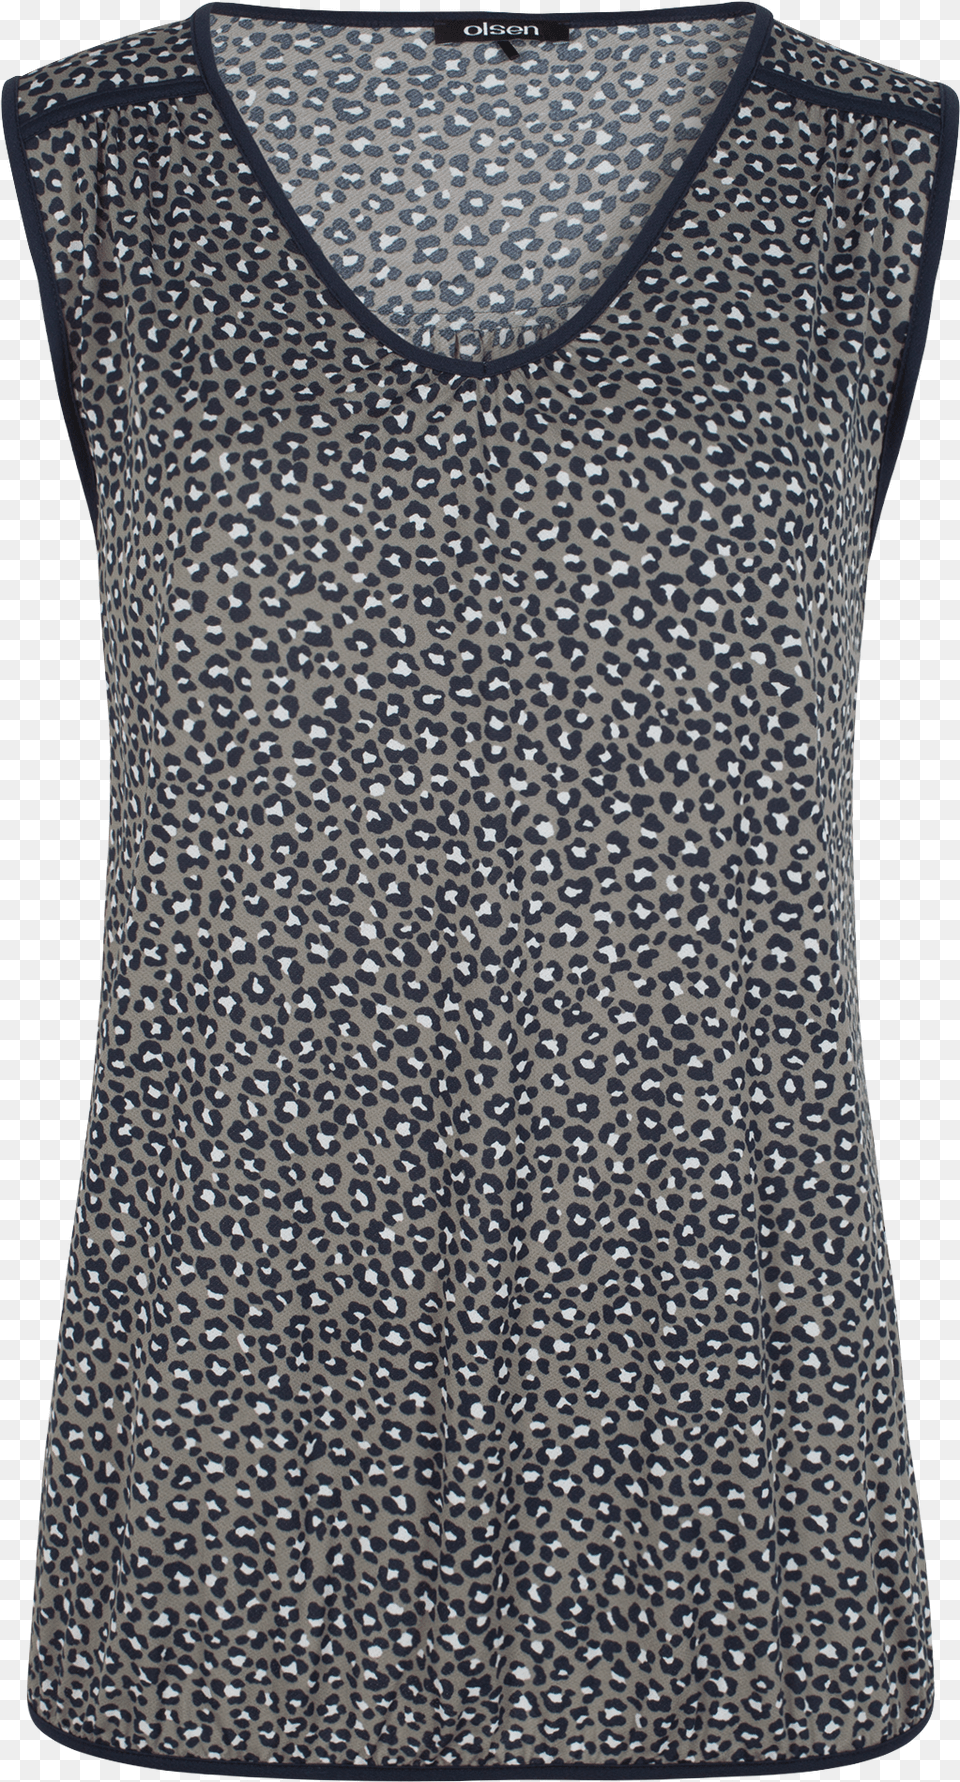 Top Leopard Print Little Black Dress, Clothing, Undershirt, Blouse, Shirt Png Image